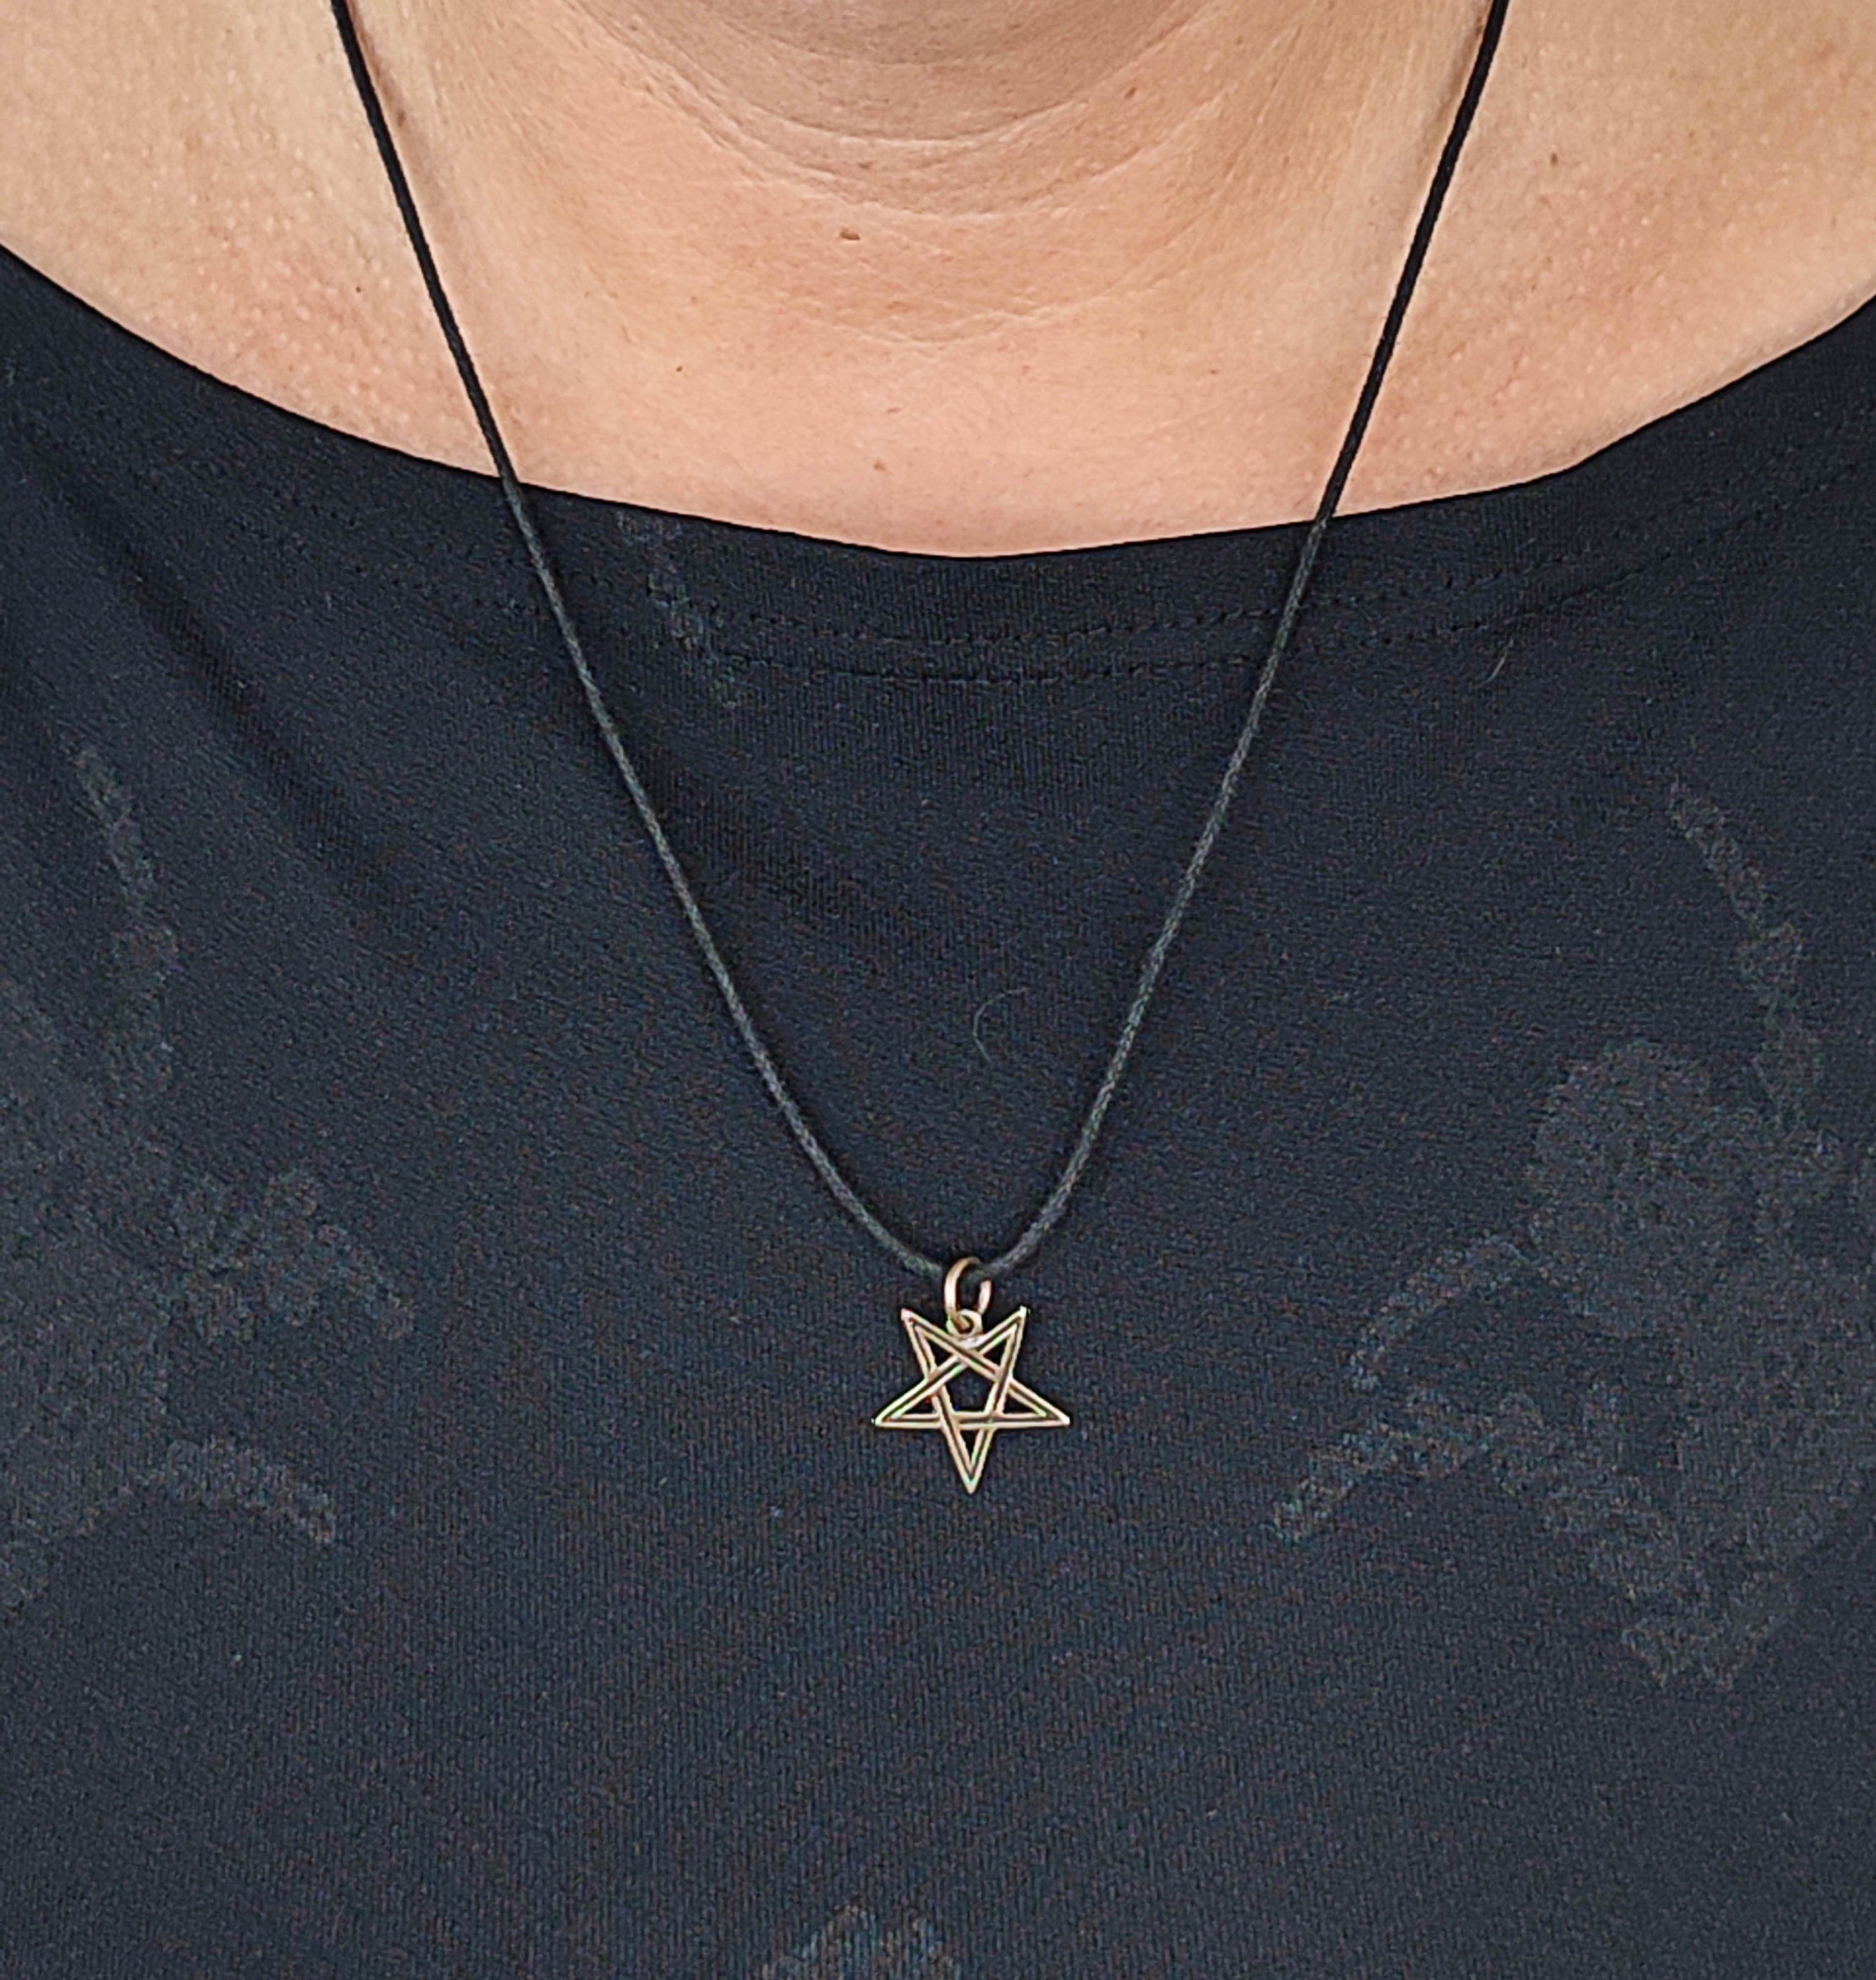 of Kiss Luzifer Satan Pentagramm Kettenanhänger Magie Drudenfuß Leather Bronze Hexe